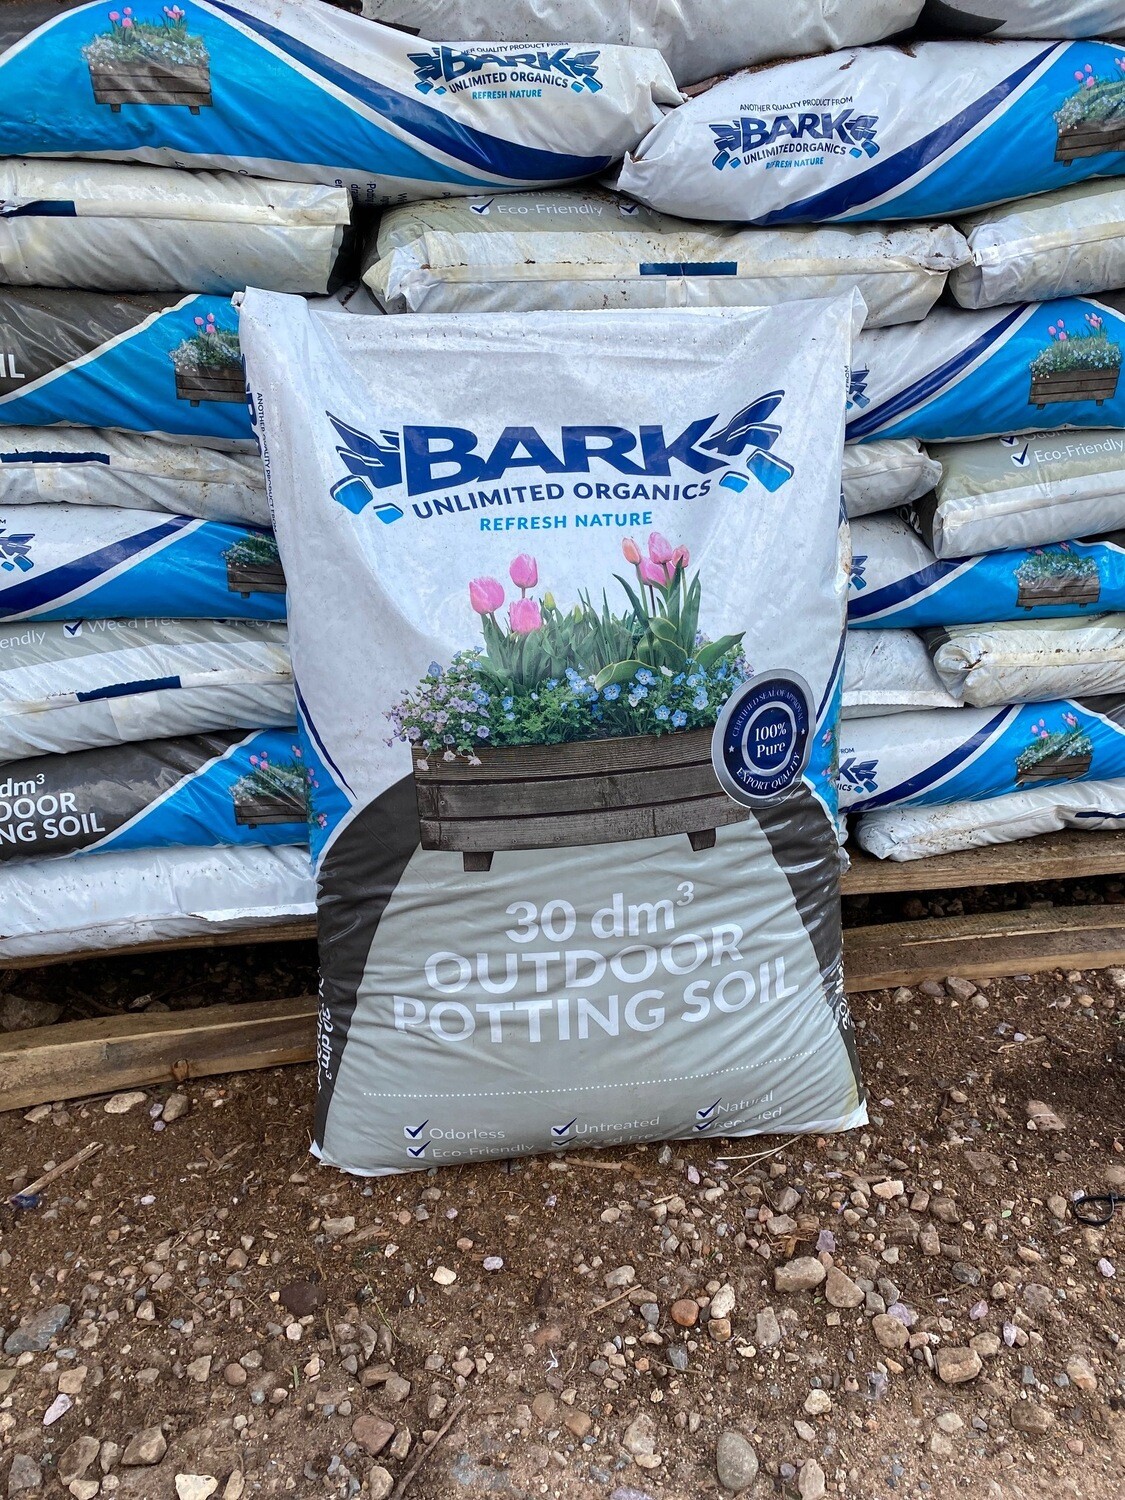 Bark Unlimited Outdoor Potting Soil 30dm3